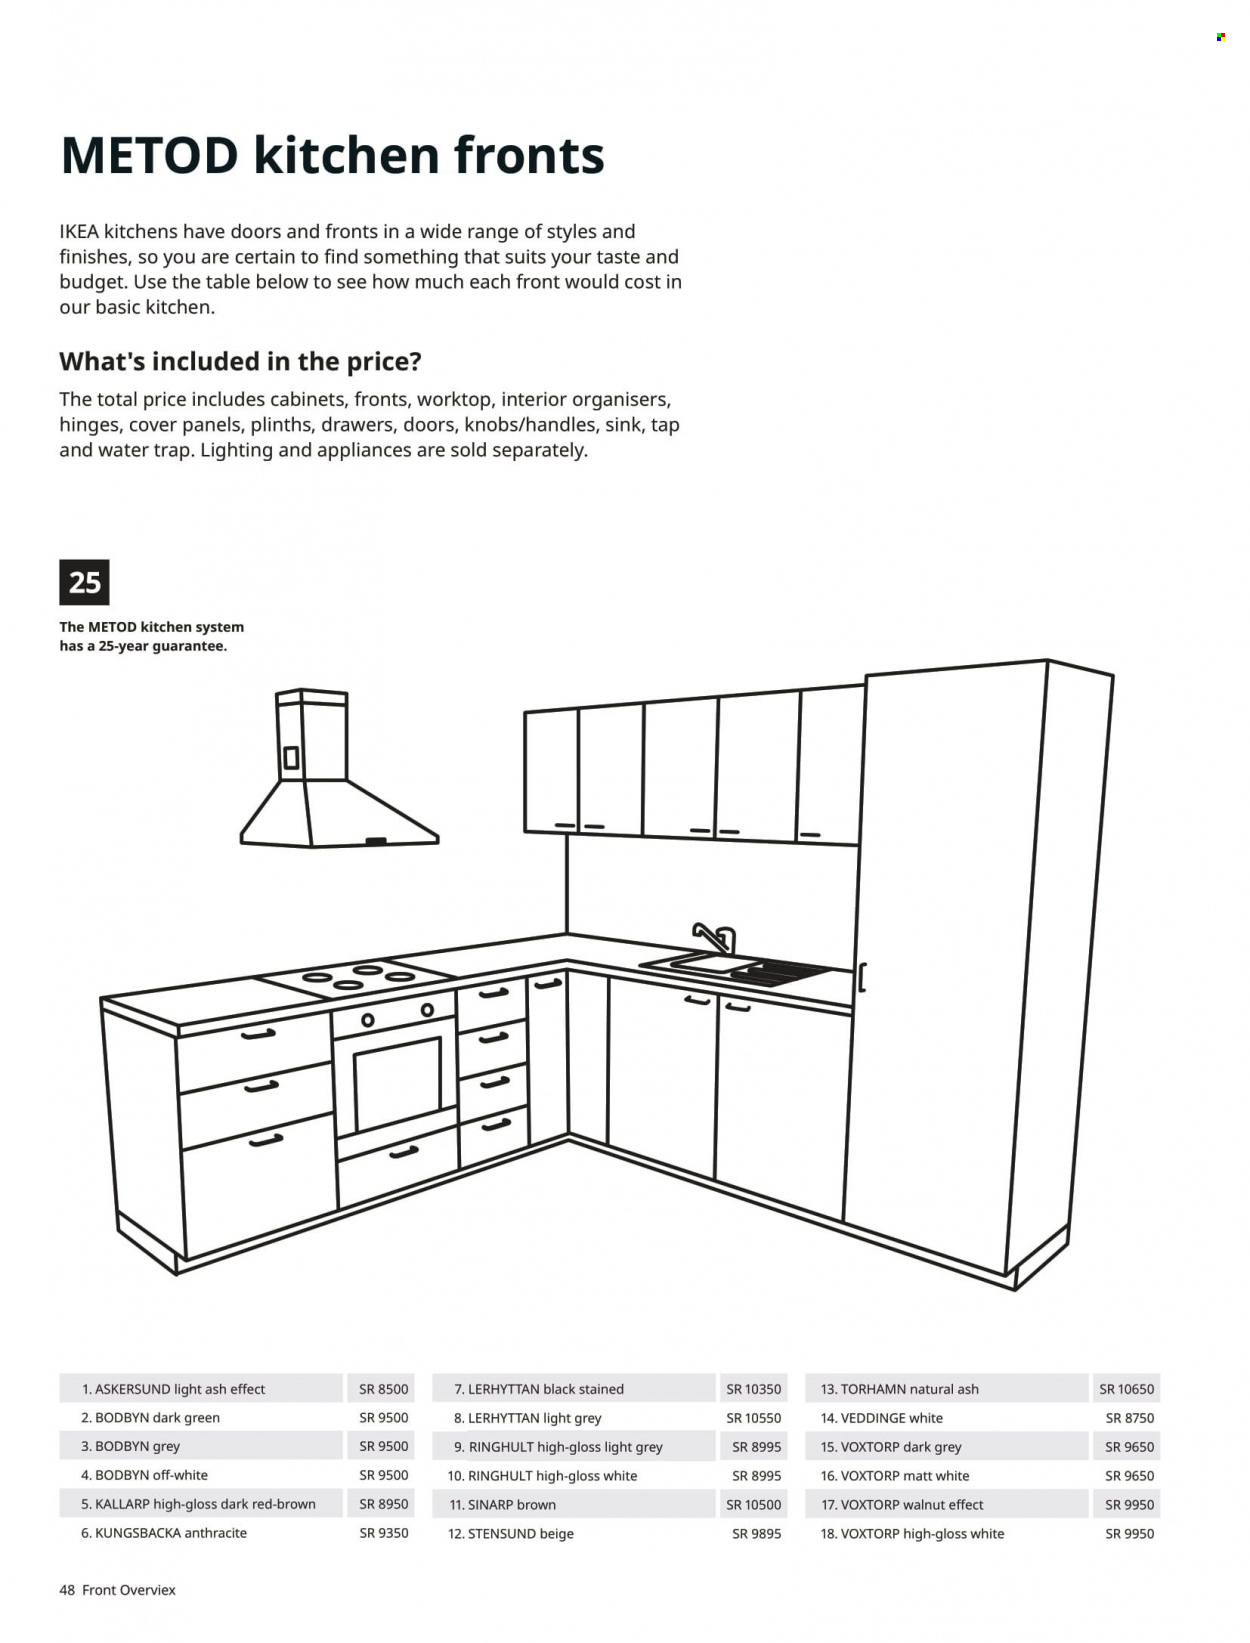 IKEA flyer . Page 48.